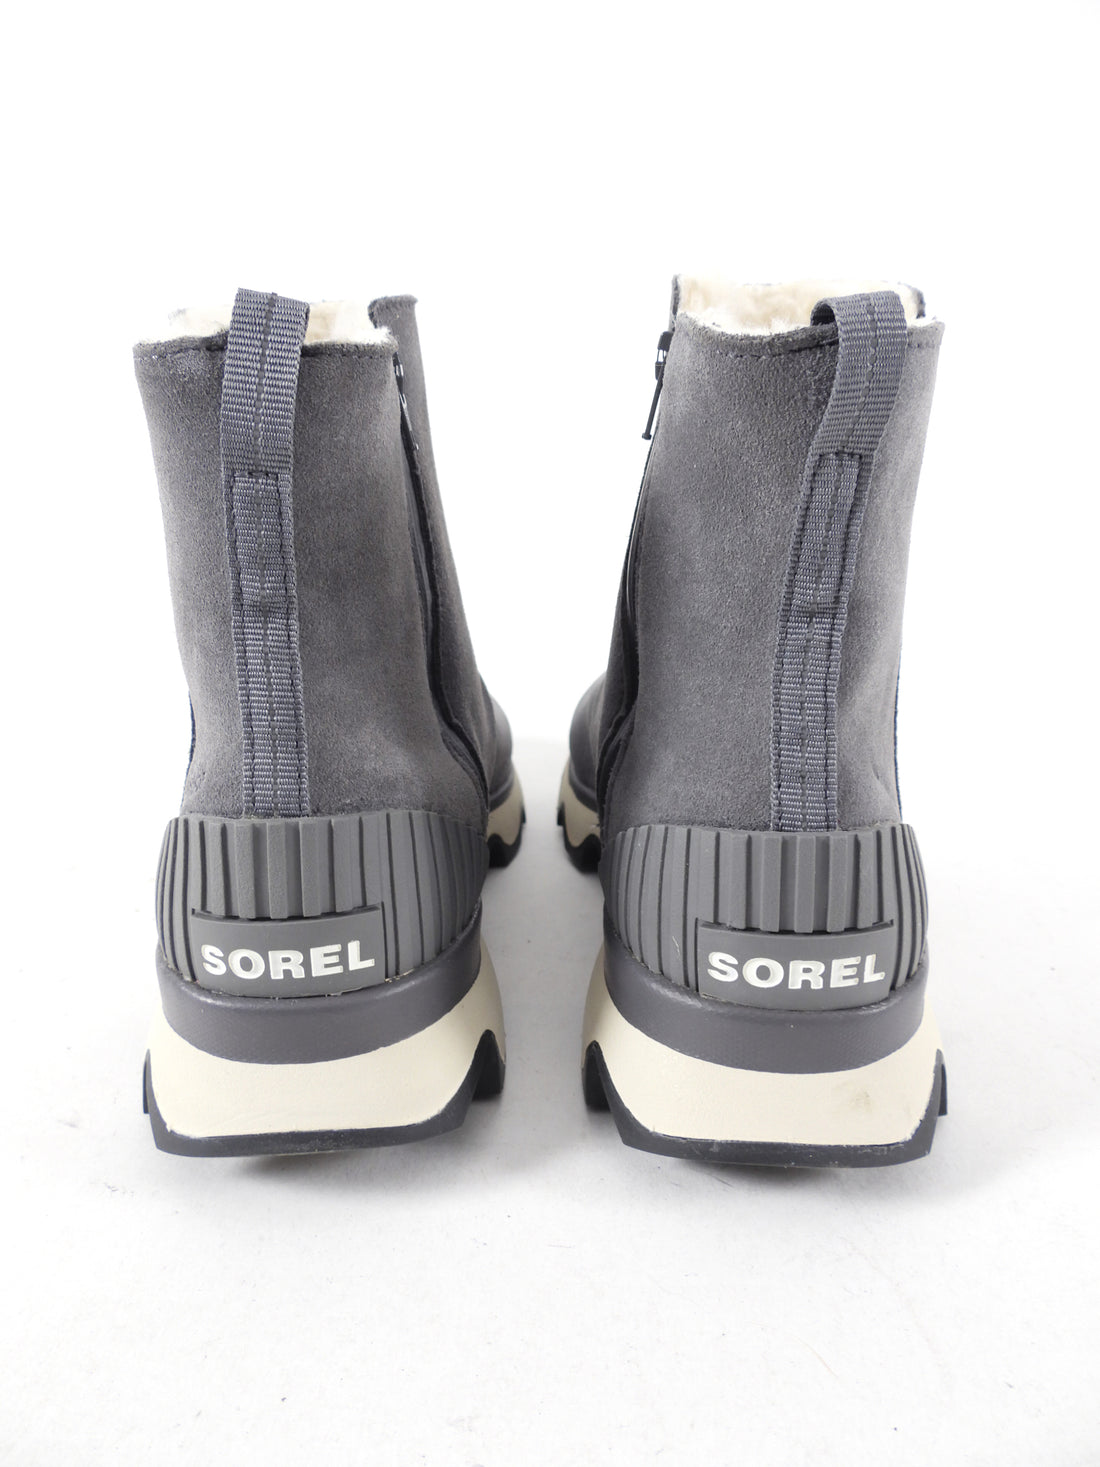 Sorel Grey Suede Ankle Zip Boots - 6.5